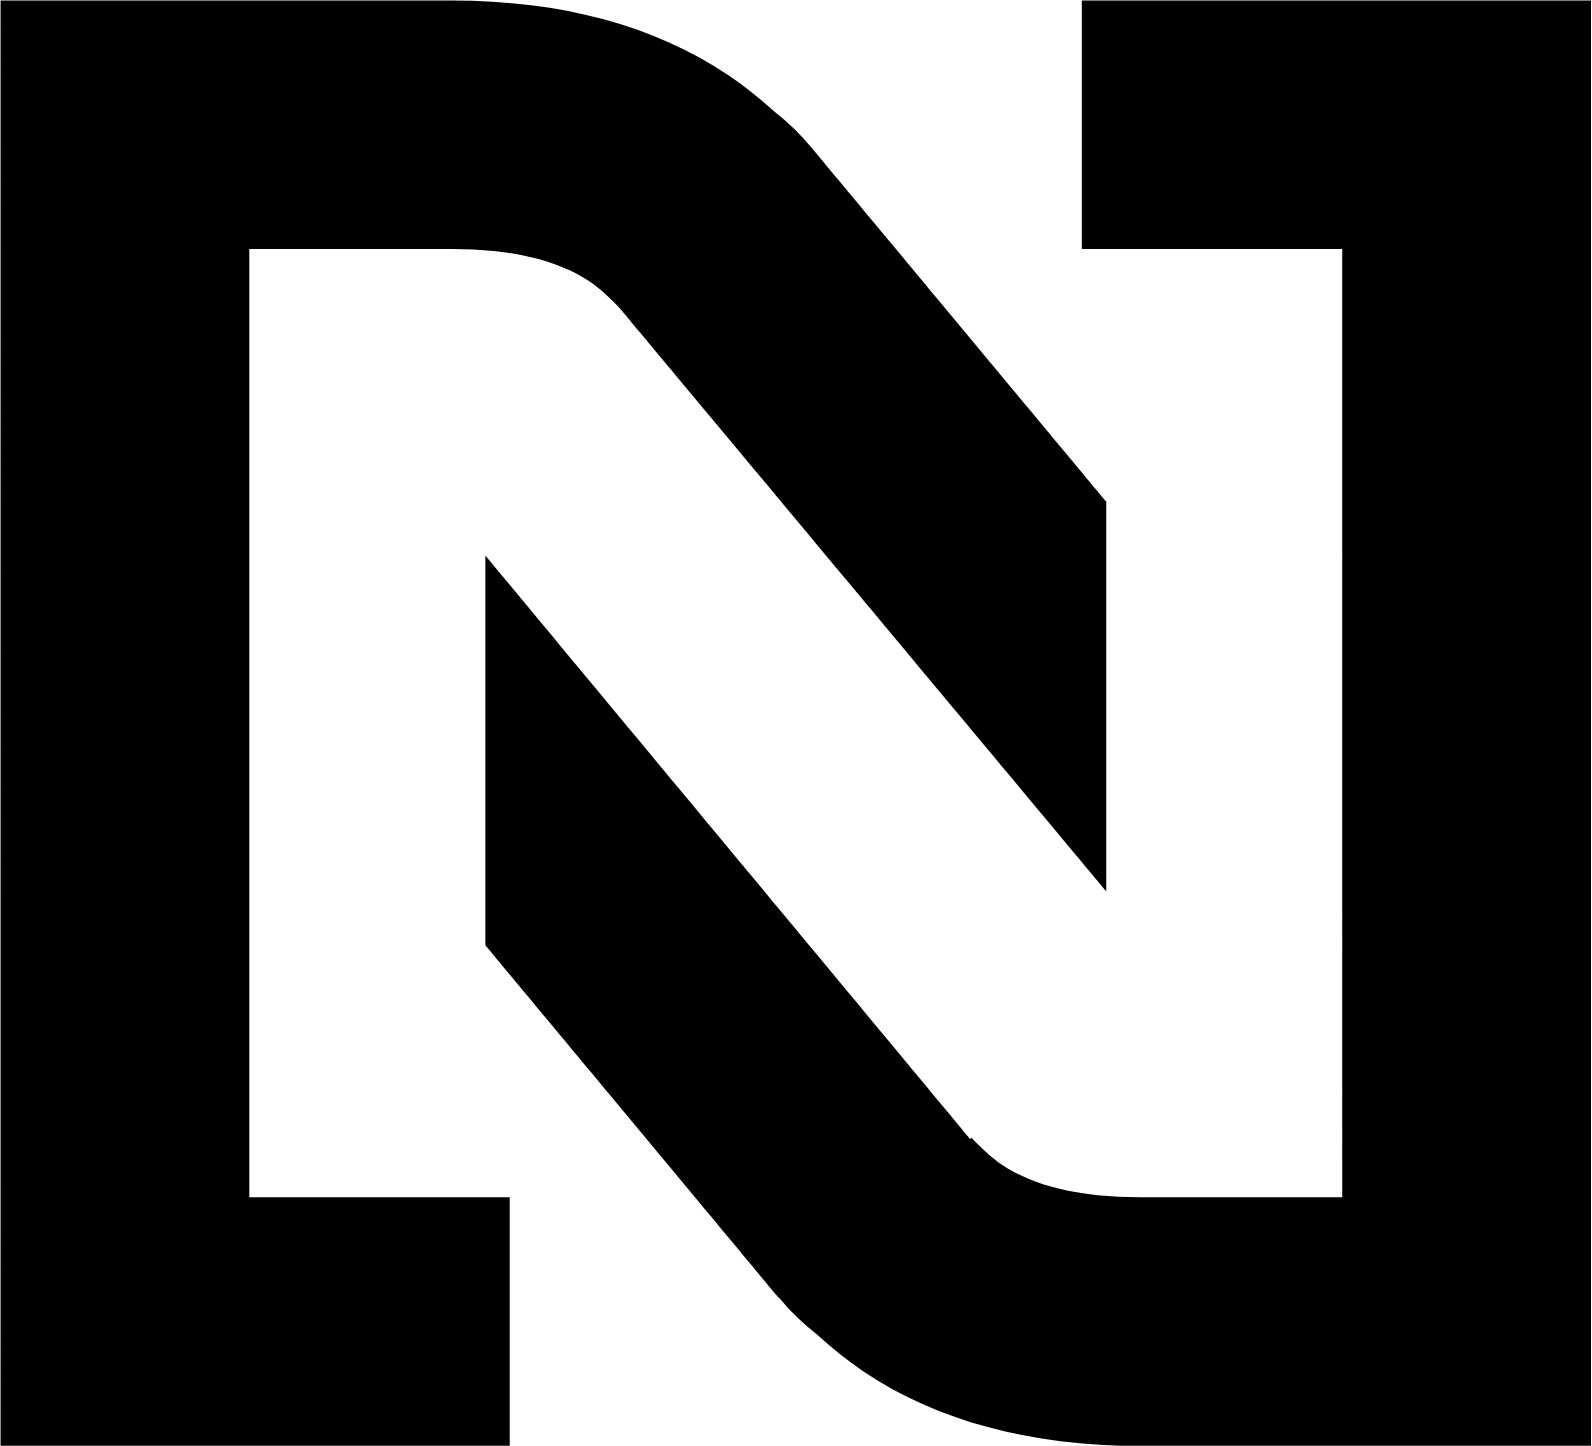 NextNav logo (transparent PNG)